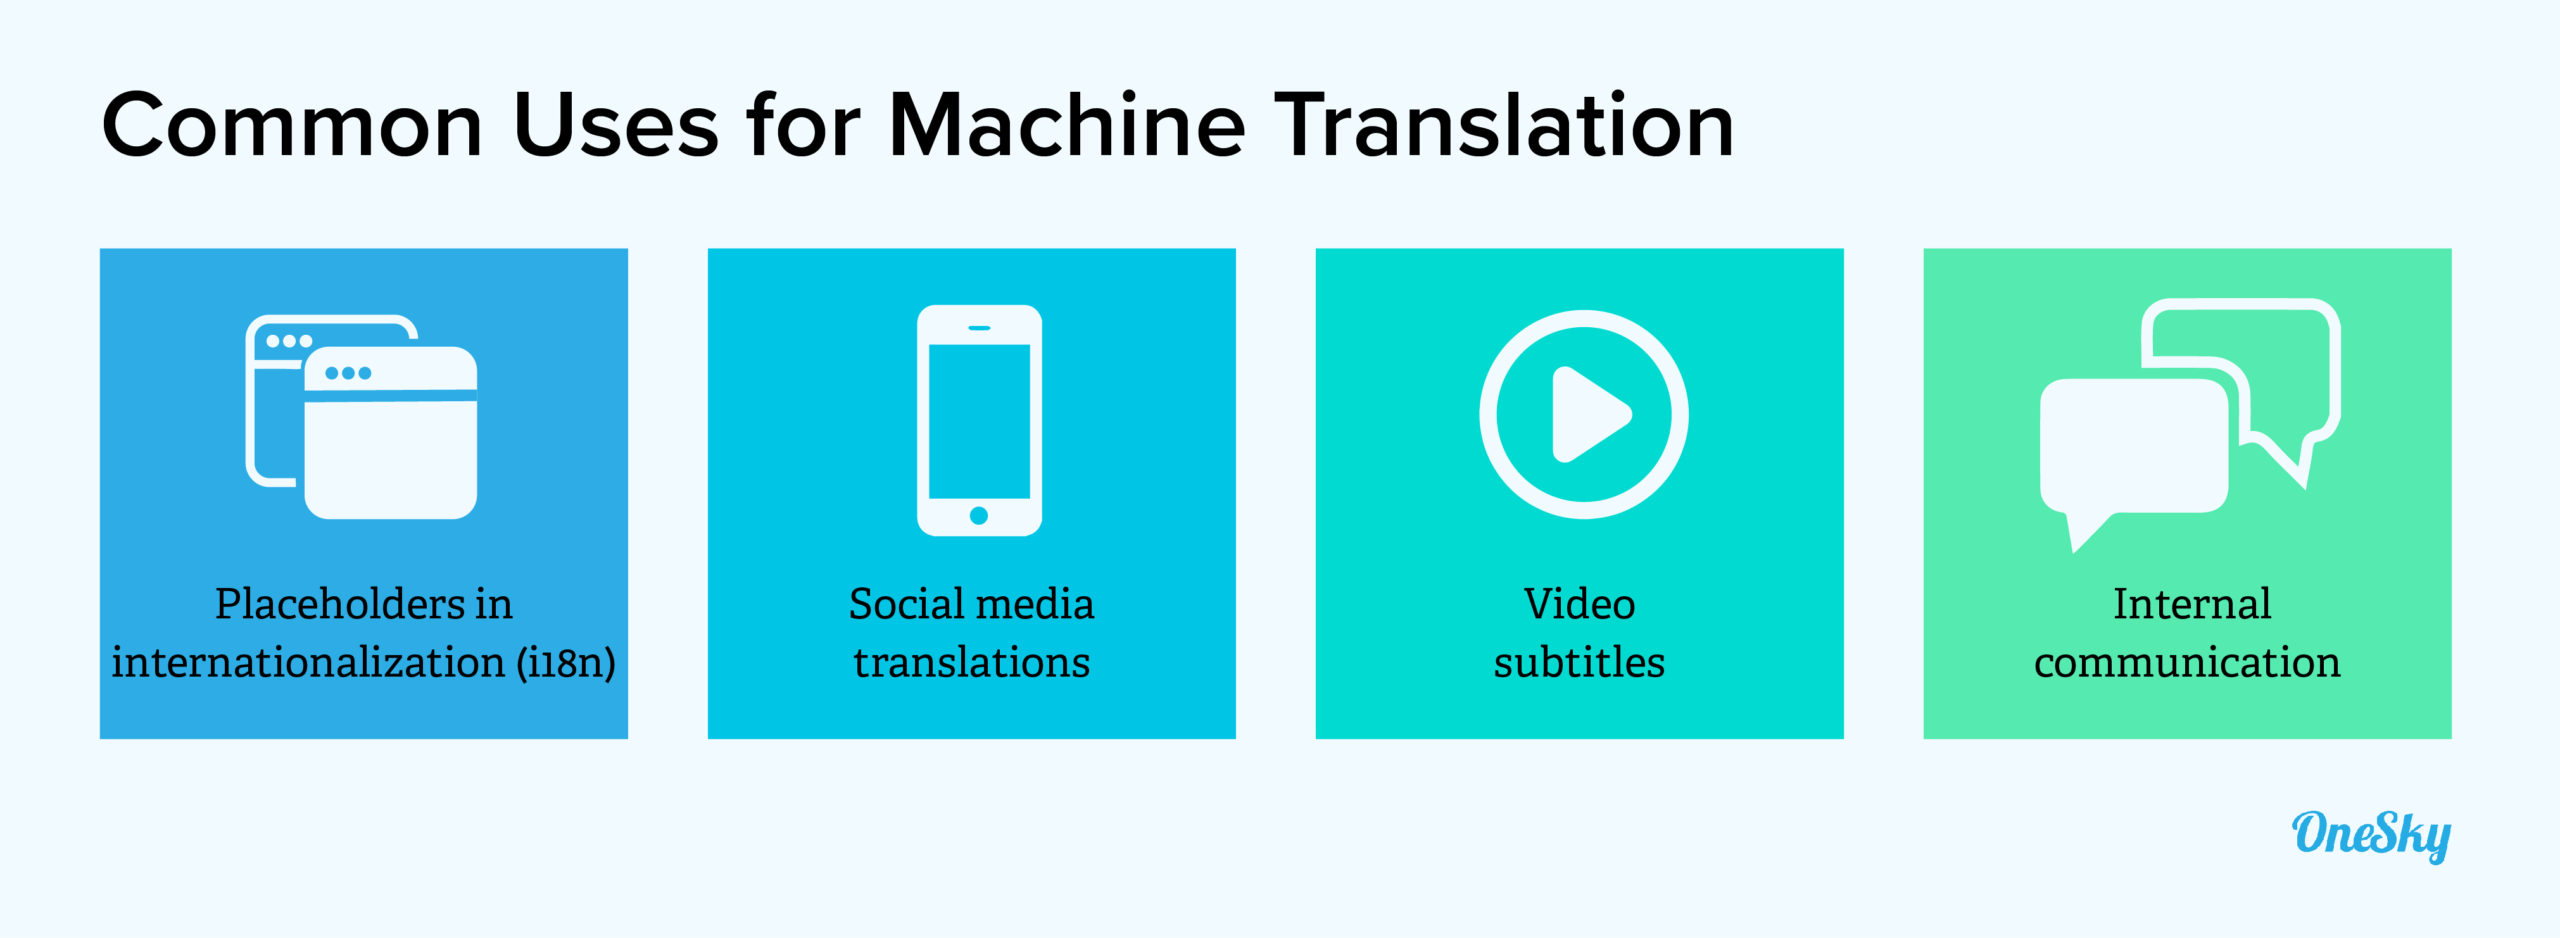 Machine Translation: The Fast, Budget-Friendly Option